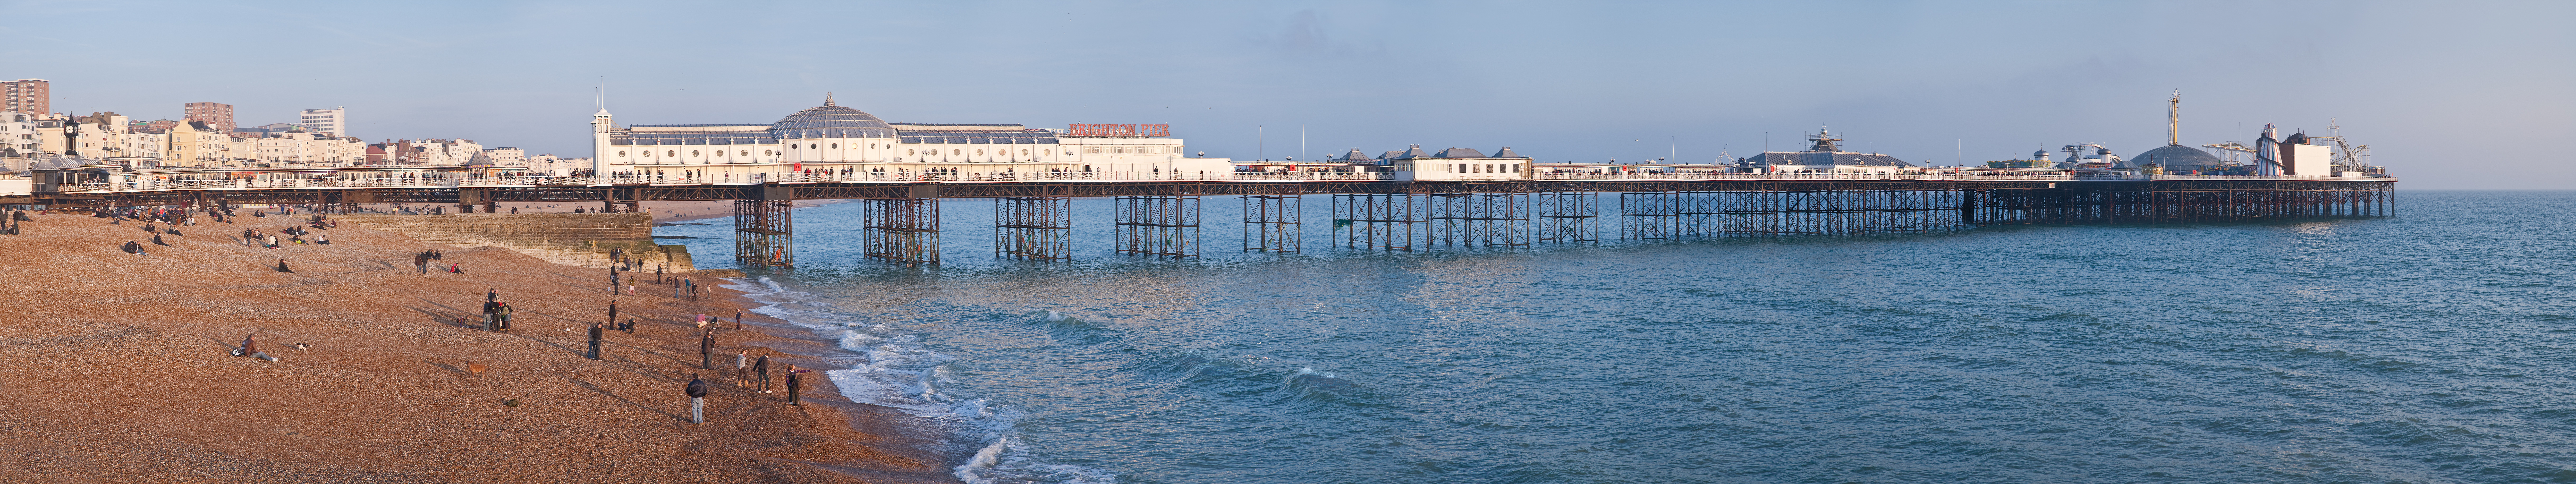 Brighton pier photo